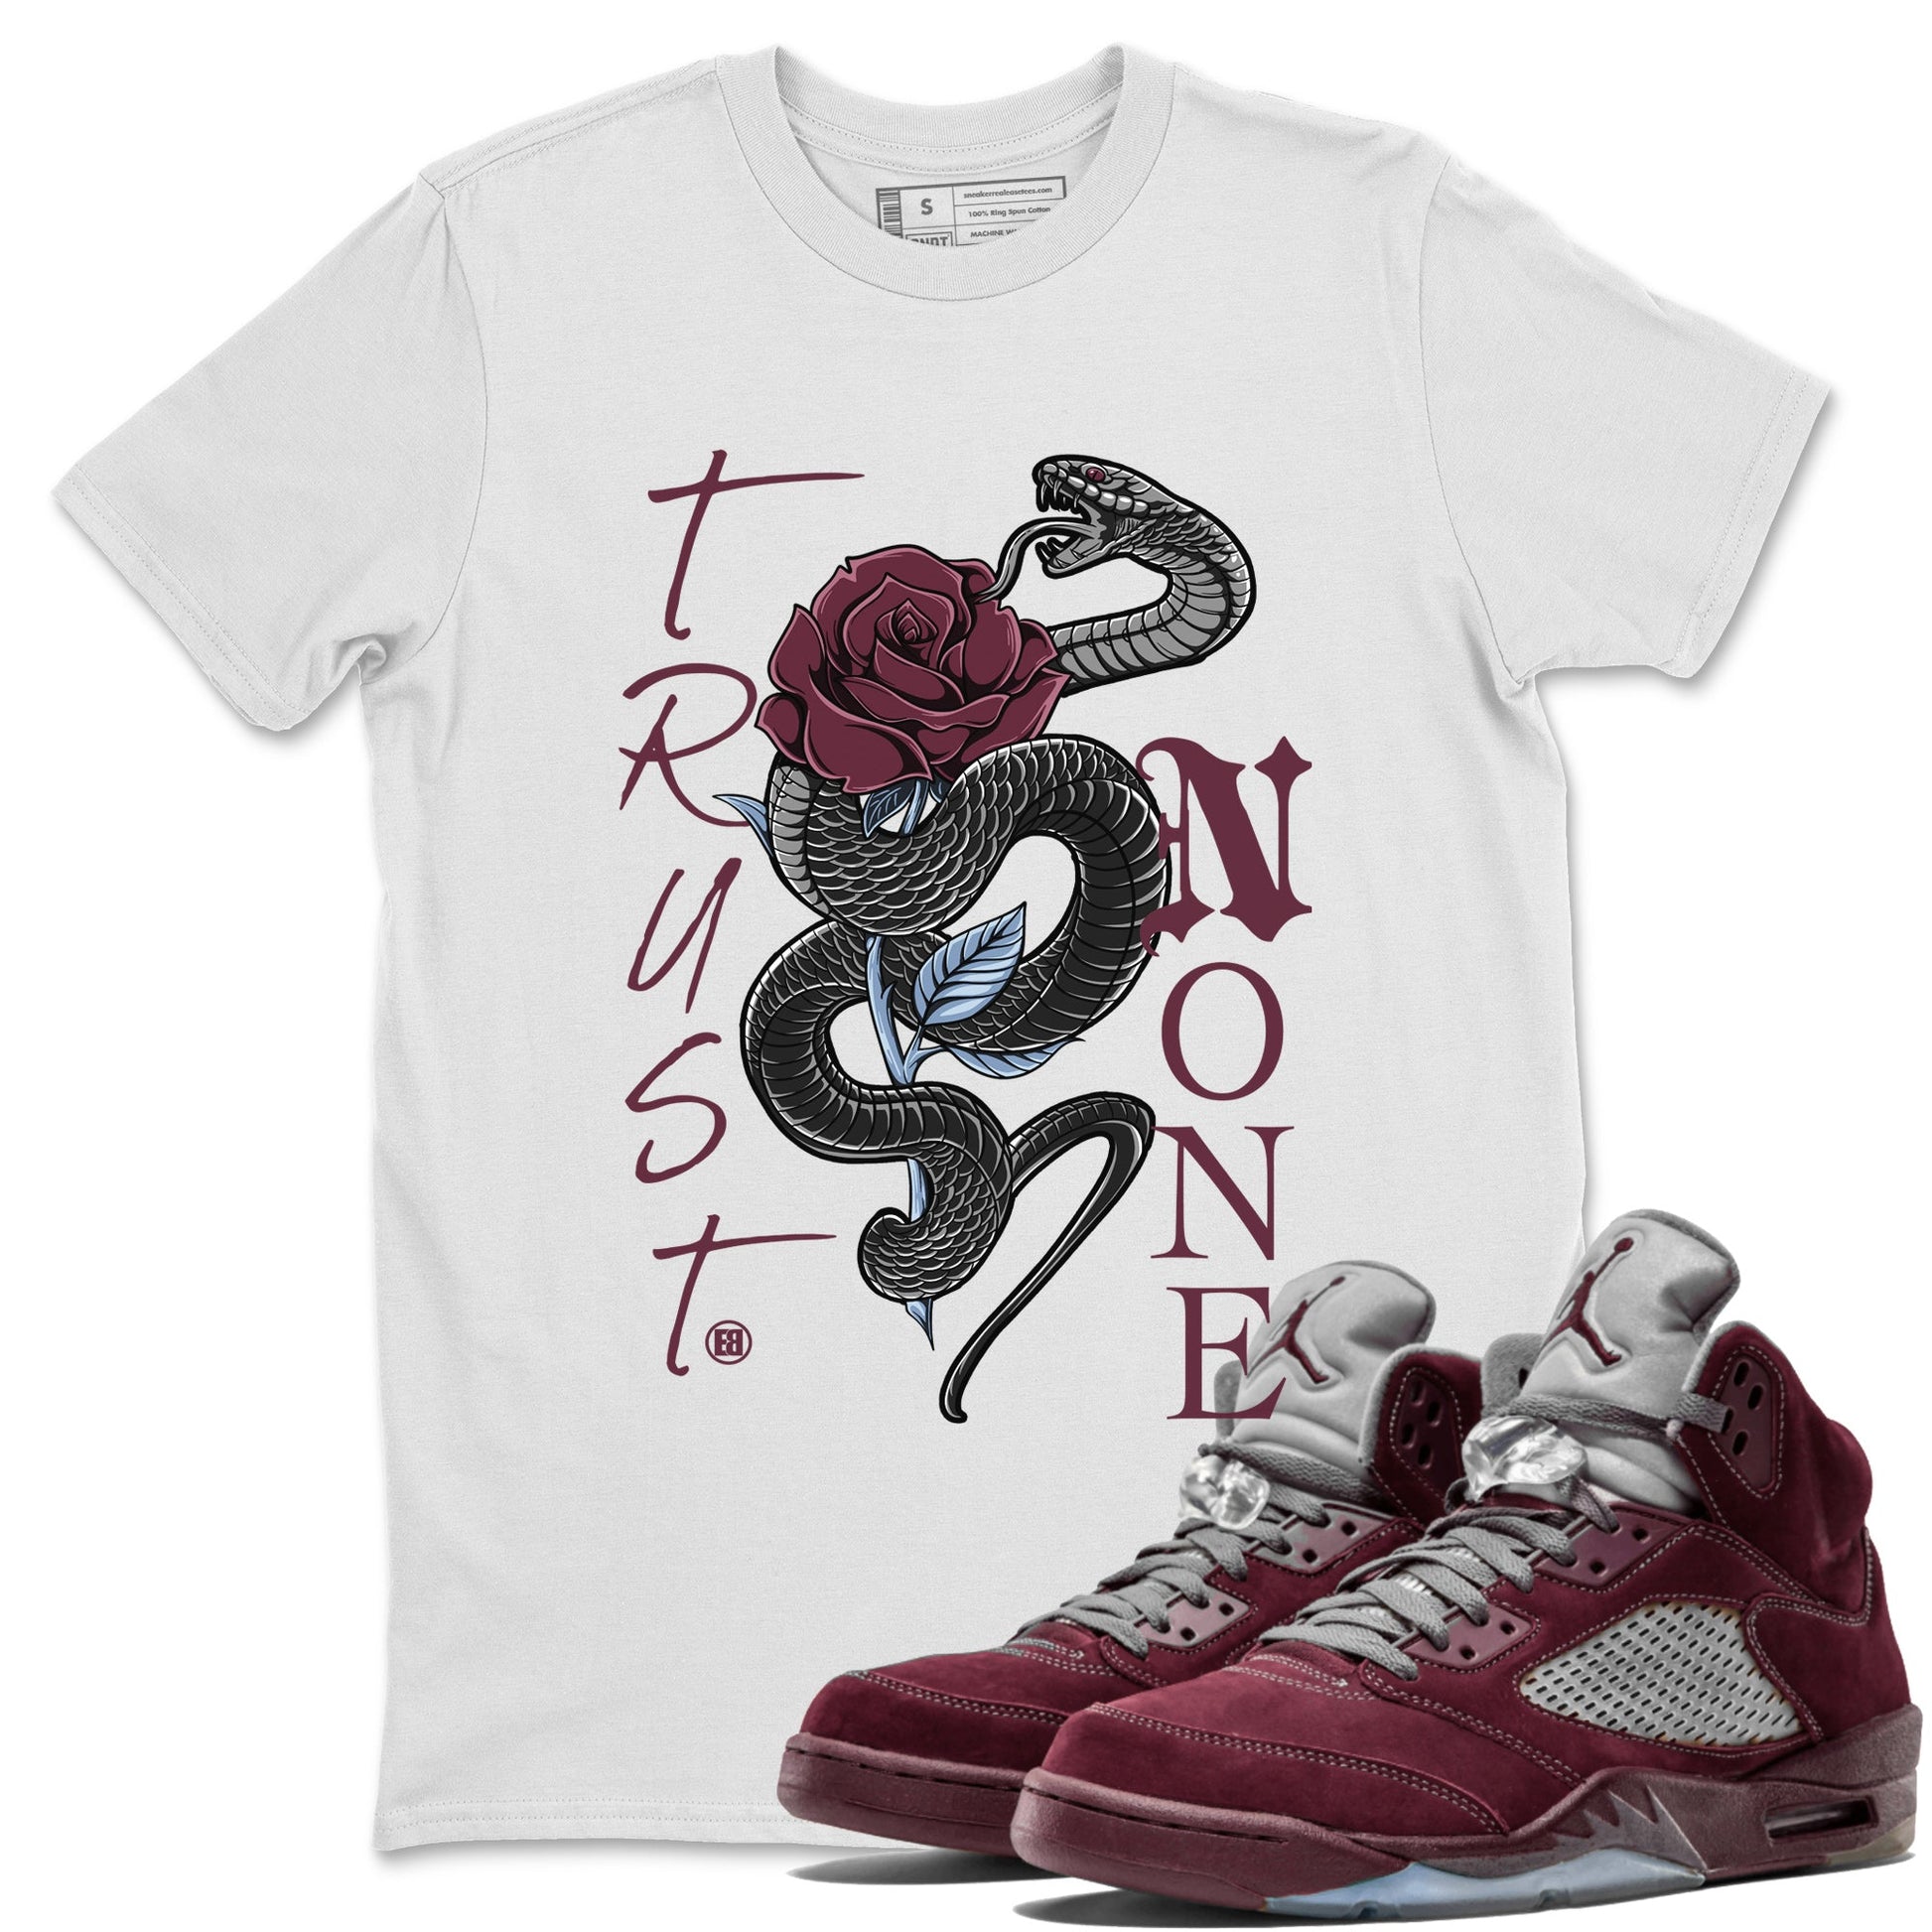 Jordan 5 Burgundy Shirts Trust None Sneaker Tees Air Jordan 5 Burgundy Sneaker Release Tees Unisex Shirts White 1